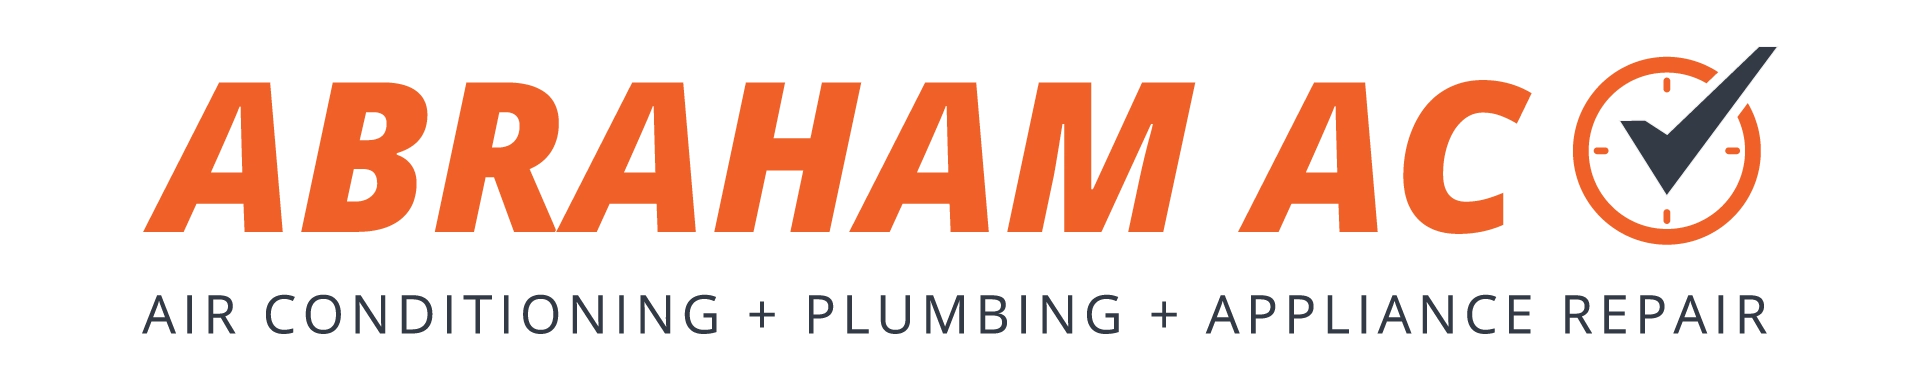 Abraham AC & Heating Services Logo